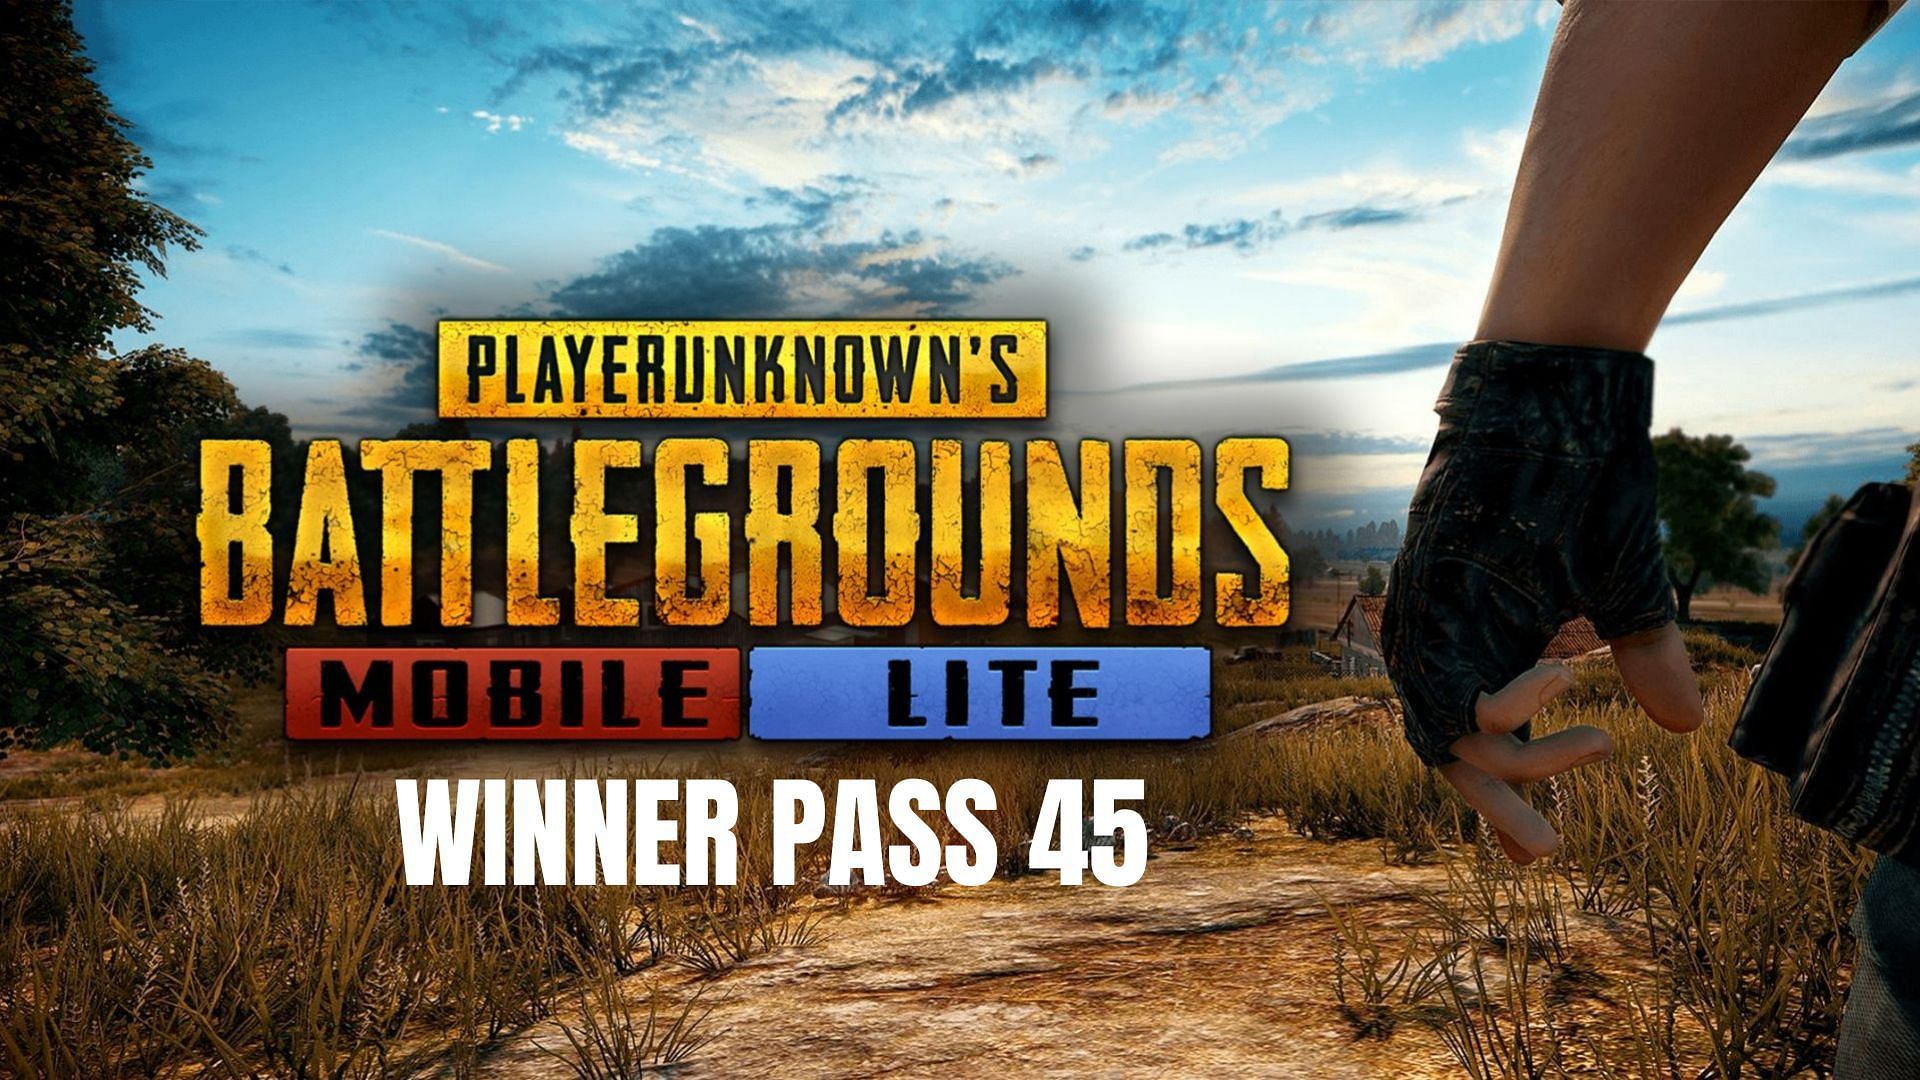 The new Winner Pass 45 is now live in PUBG Mobile Lite (Image via Sportskeeda)